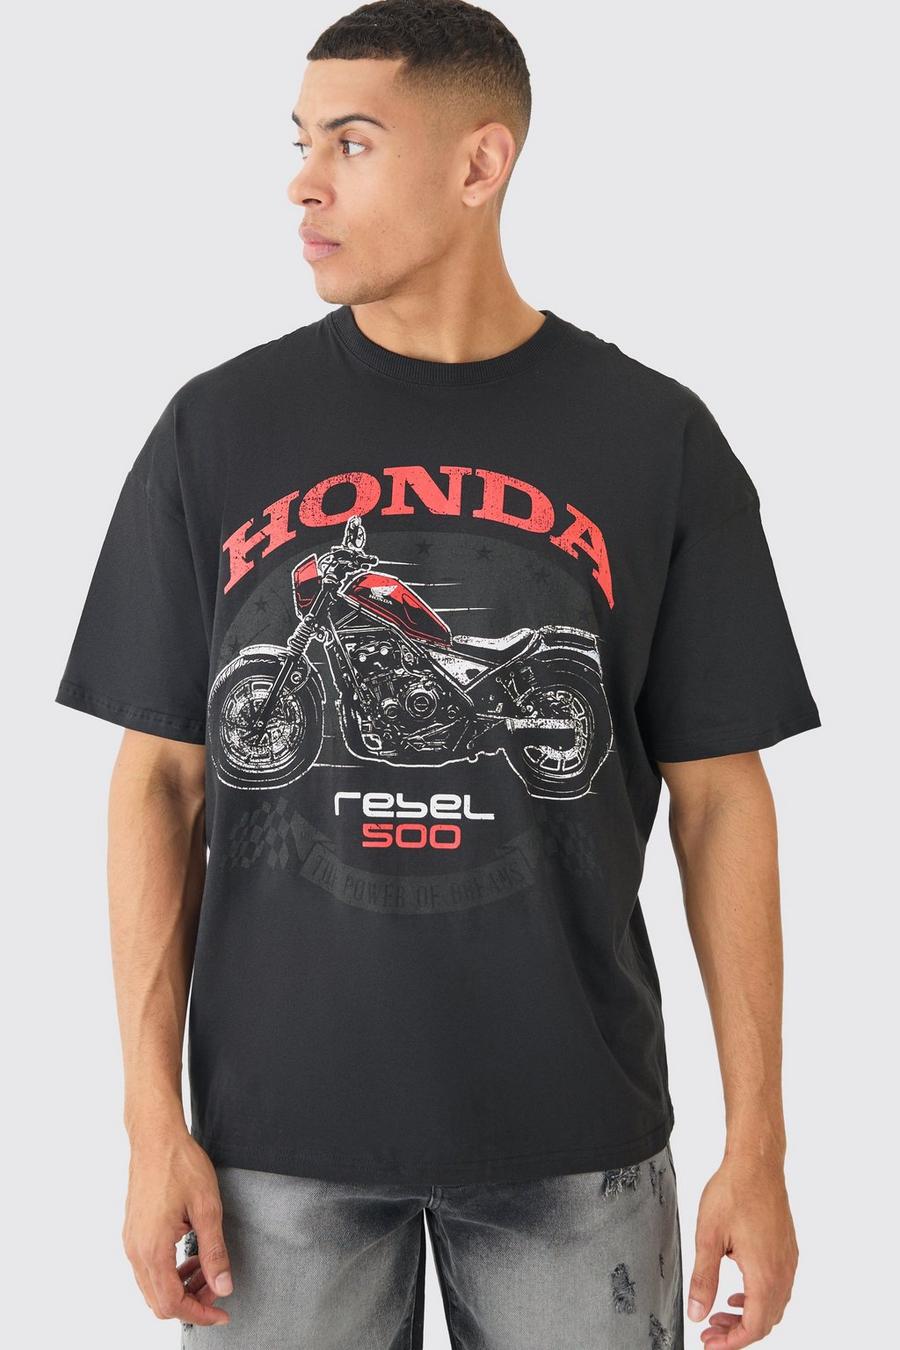 T-shirt oversize ufficiale Honda Motorcycle, Black